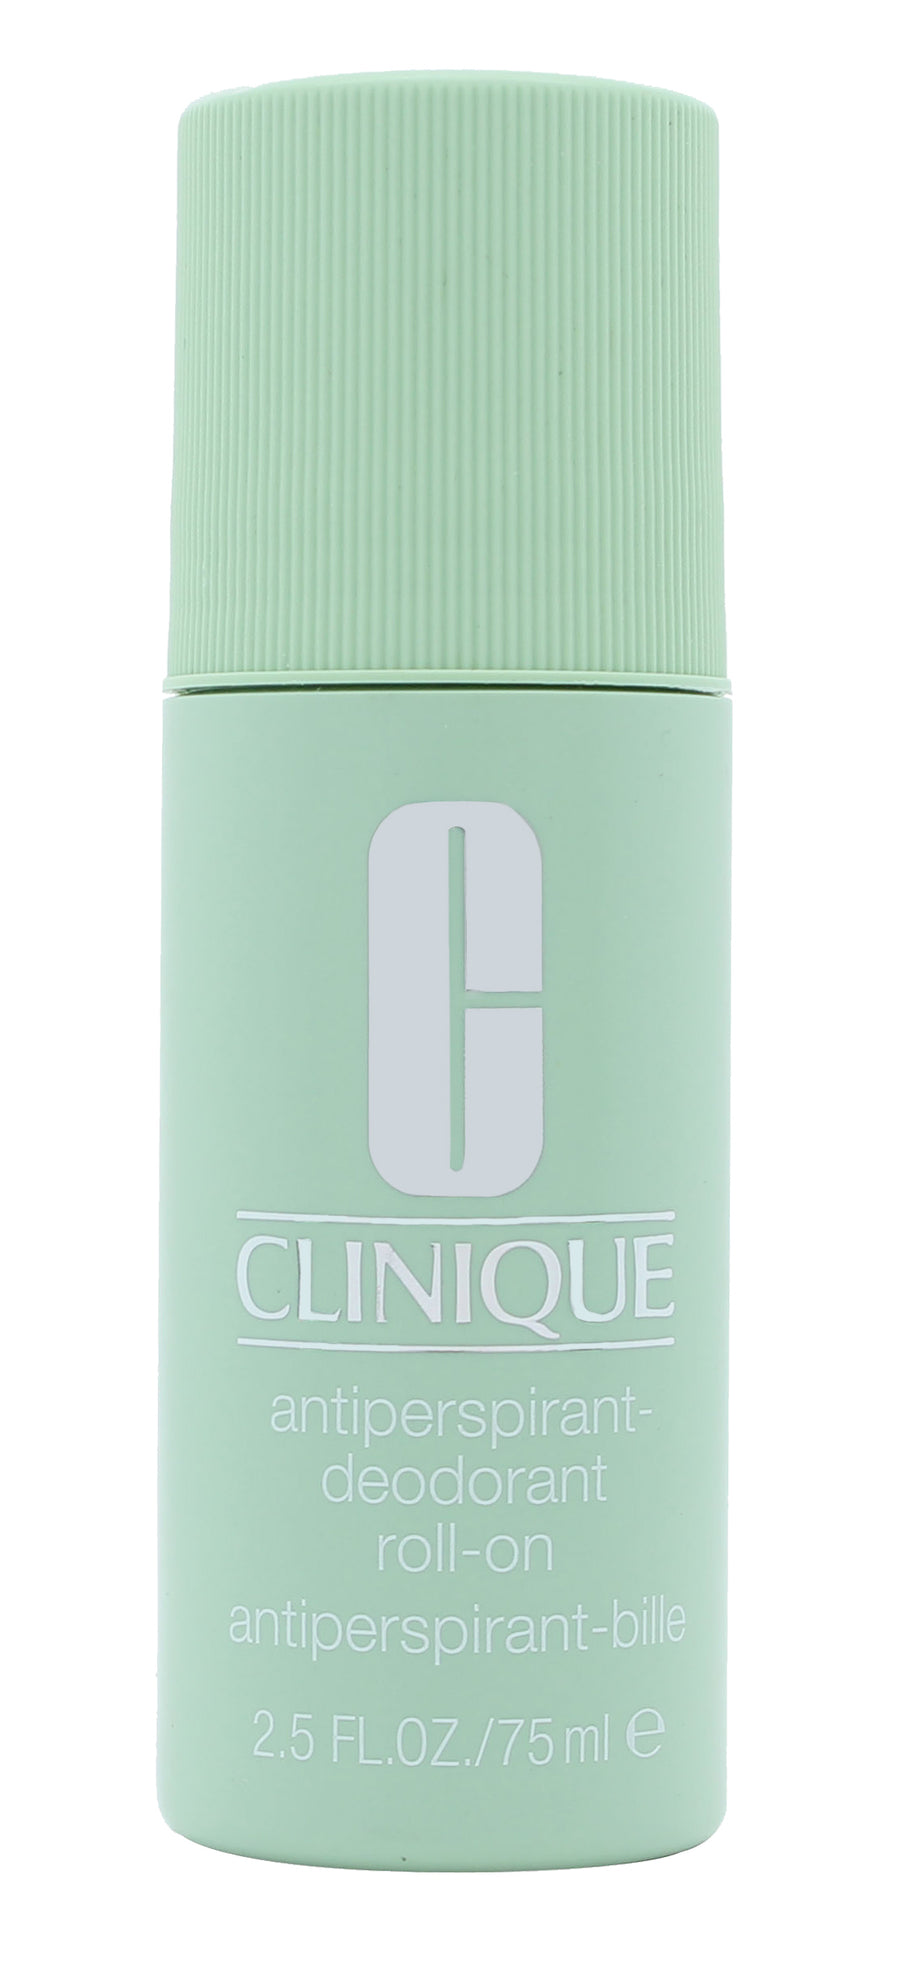 Clinique Antiperspirant Deodorant Roll-On 75ml